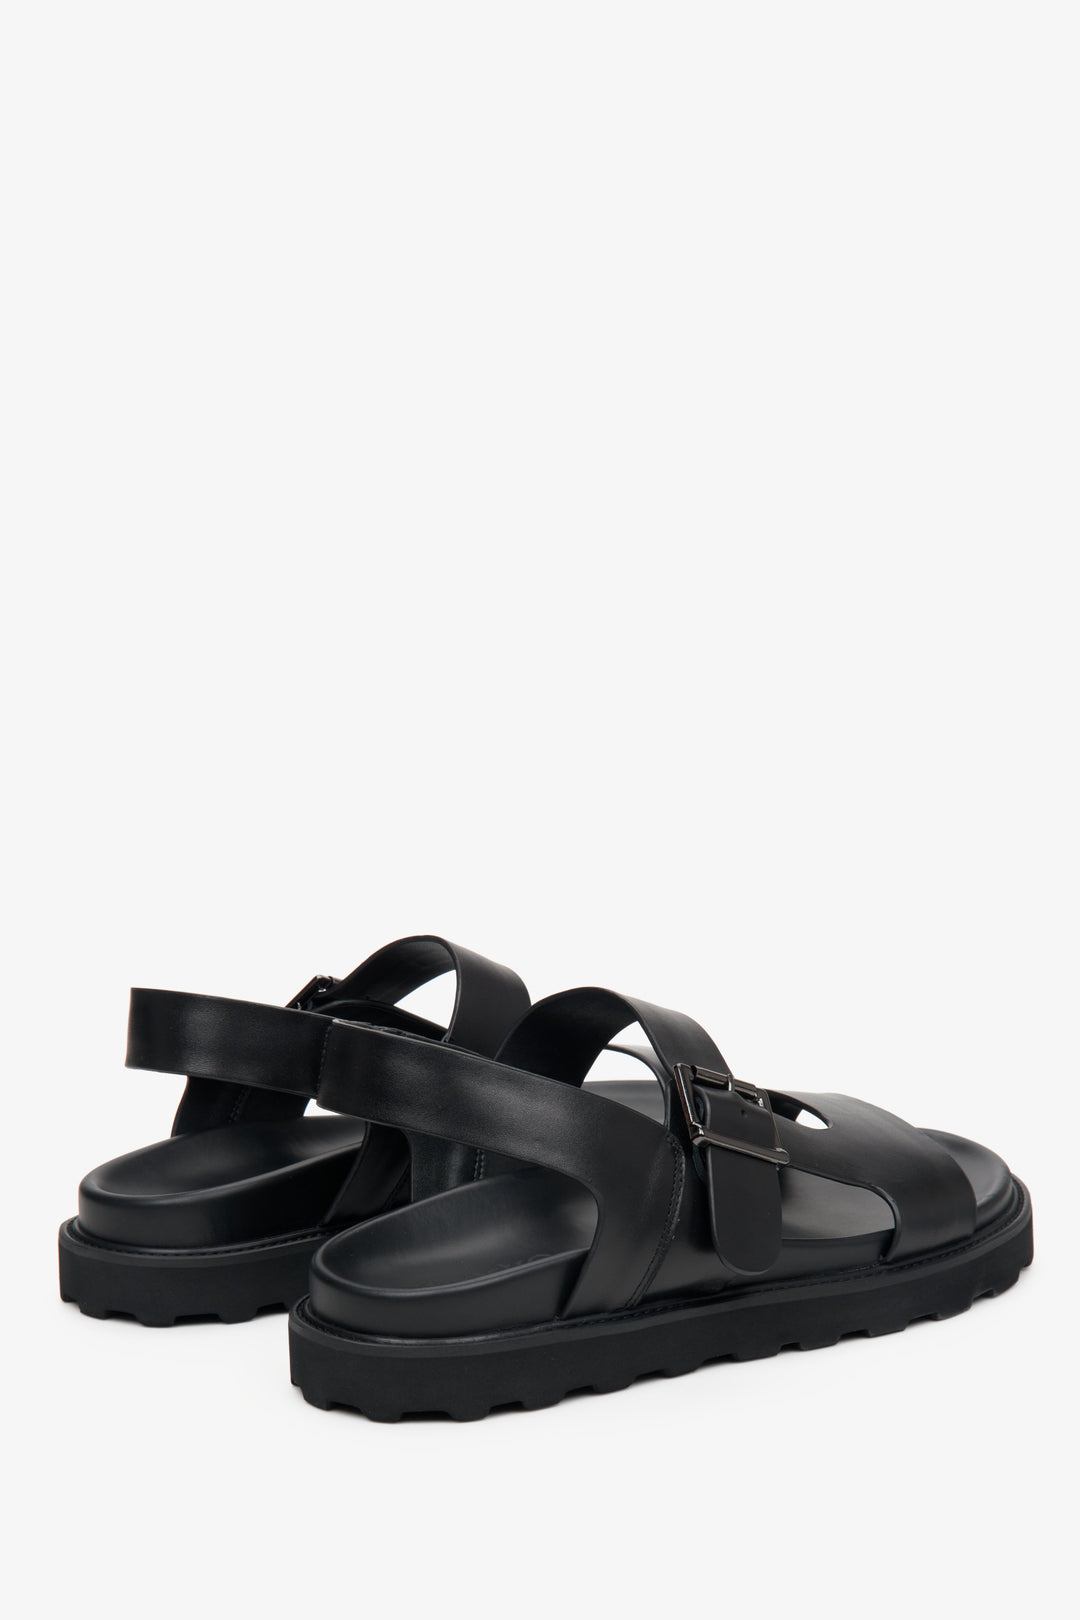 Men's black sandals made of genuine leather, Estro brand - a close-up on heel line.